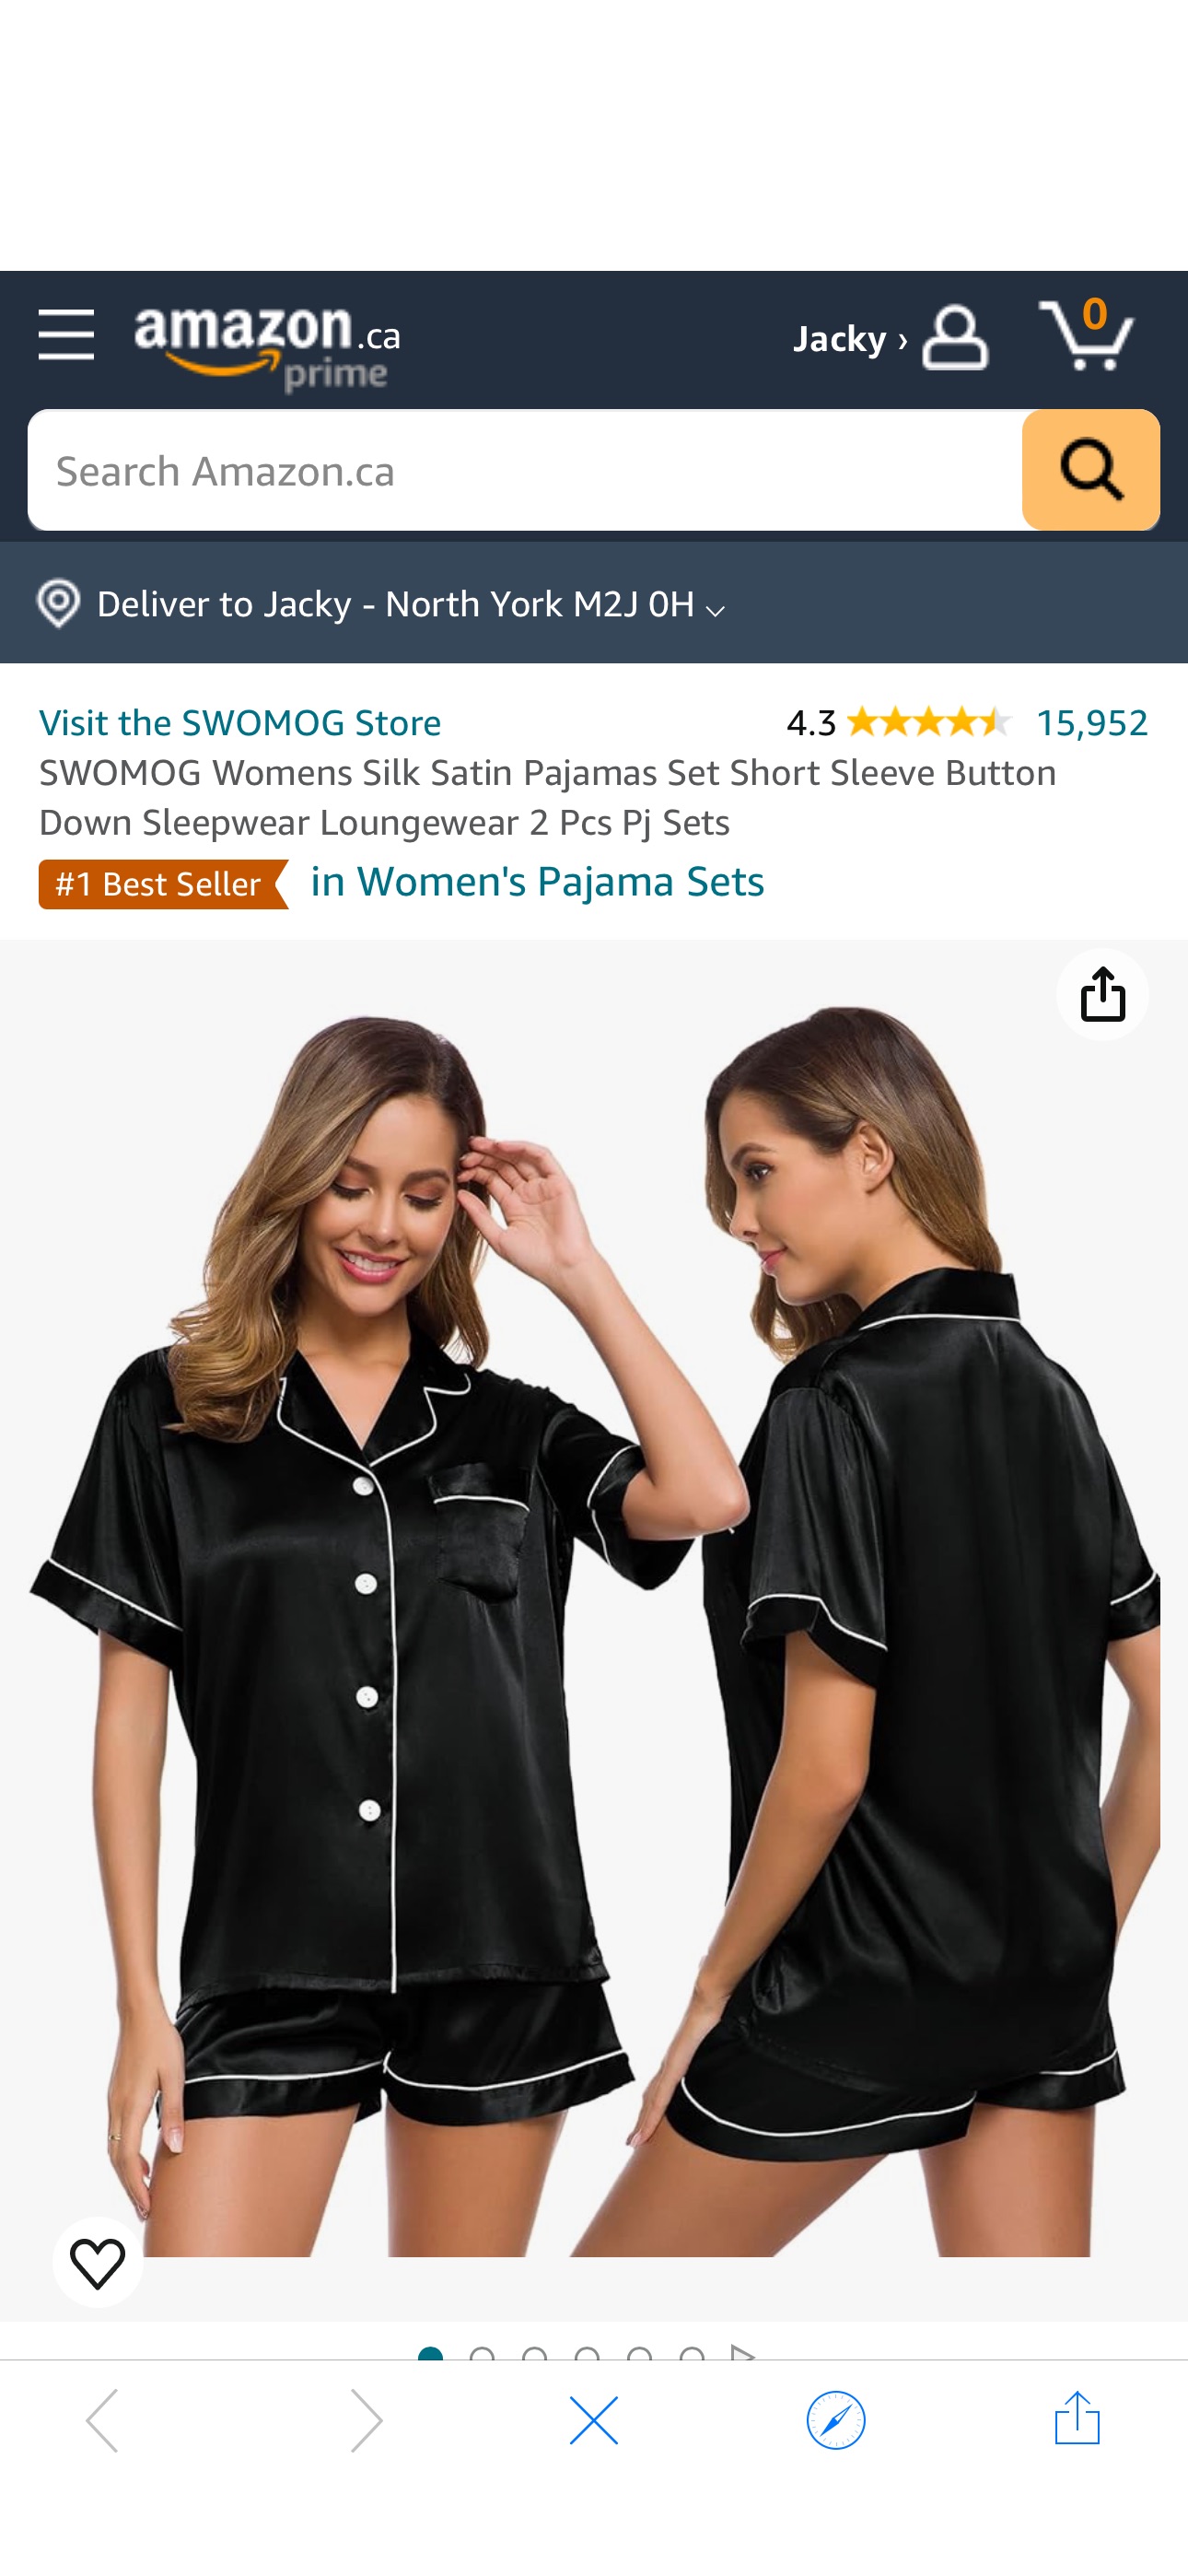 SWOMOG Womens Silk Satin Pajamas Set Two-Piece Pj Sets Sleepwear Loungewear Button-Down Pj Sets Black : Amazon.ca: Clothing, Shoes & Accessories